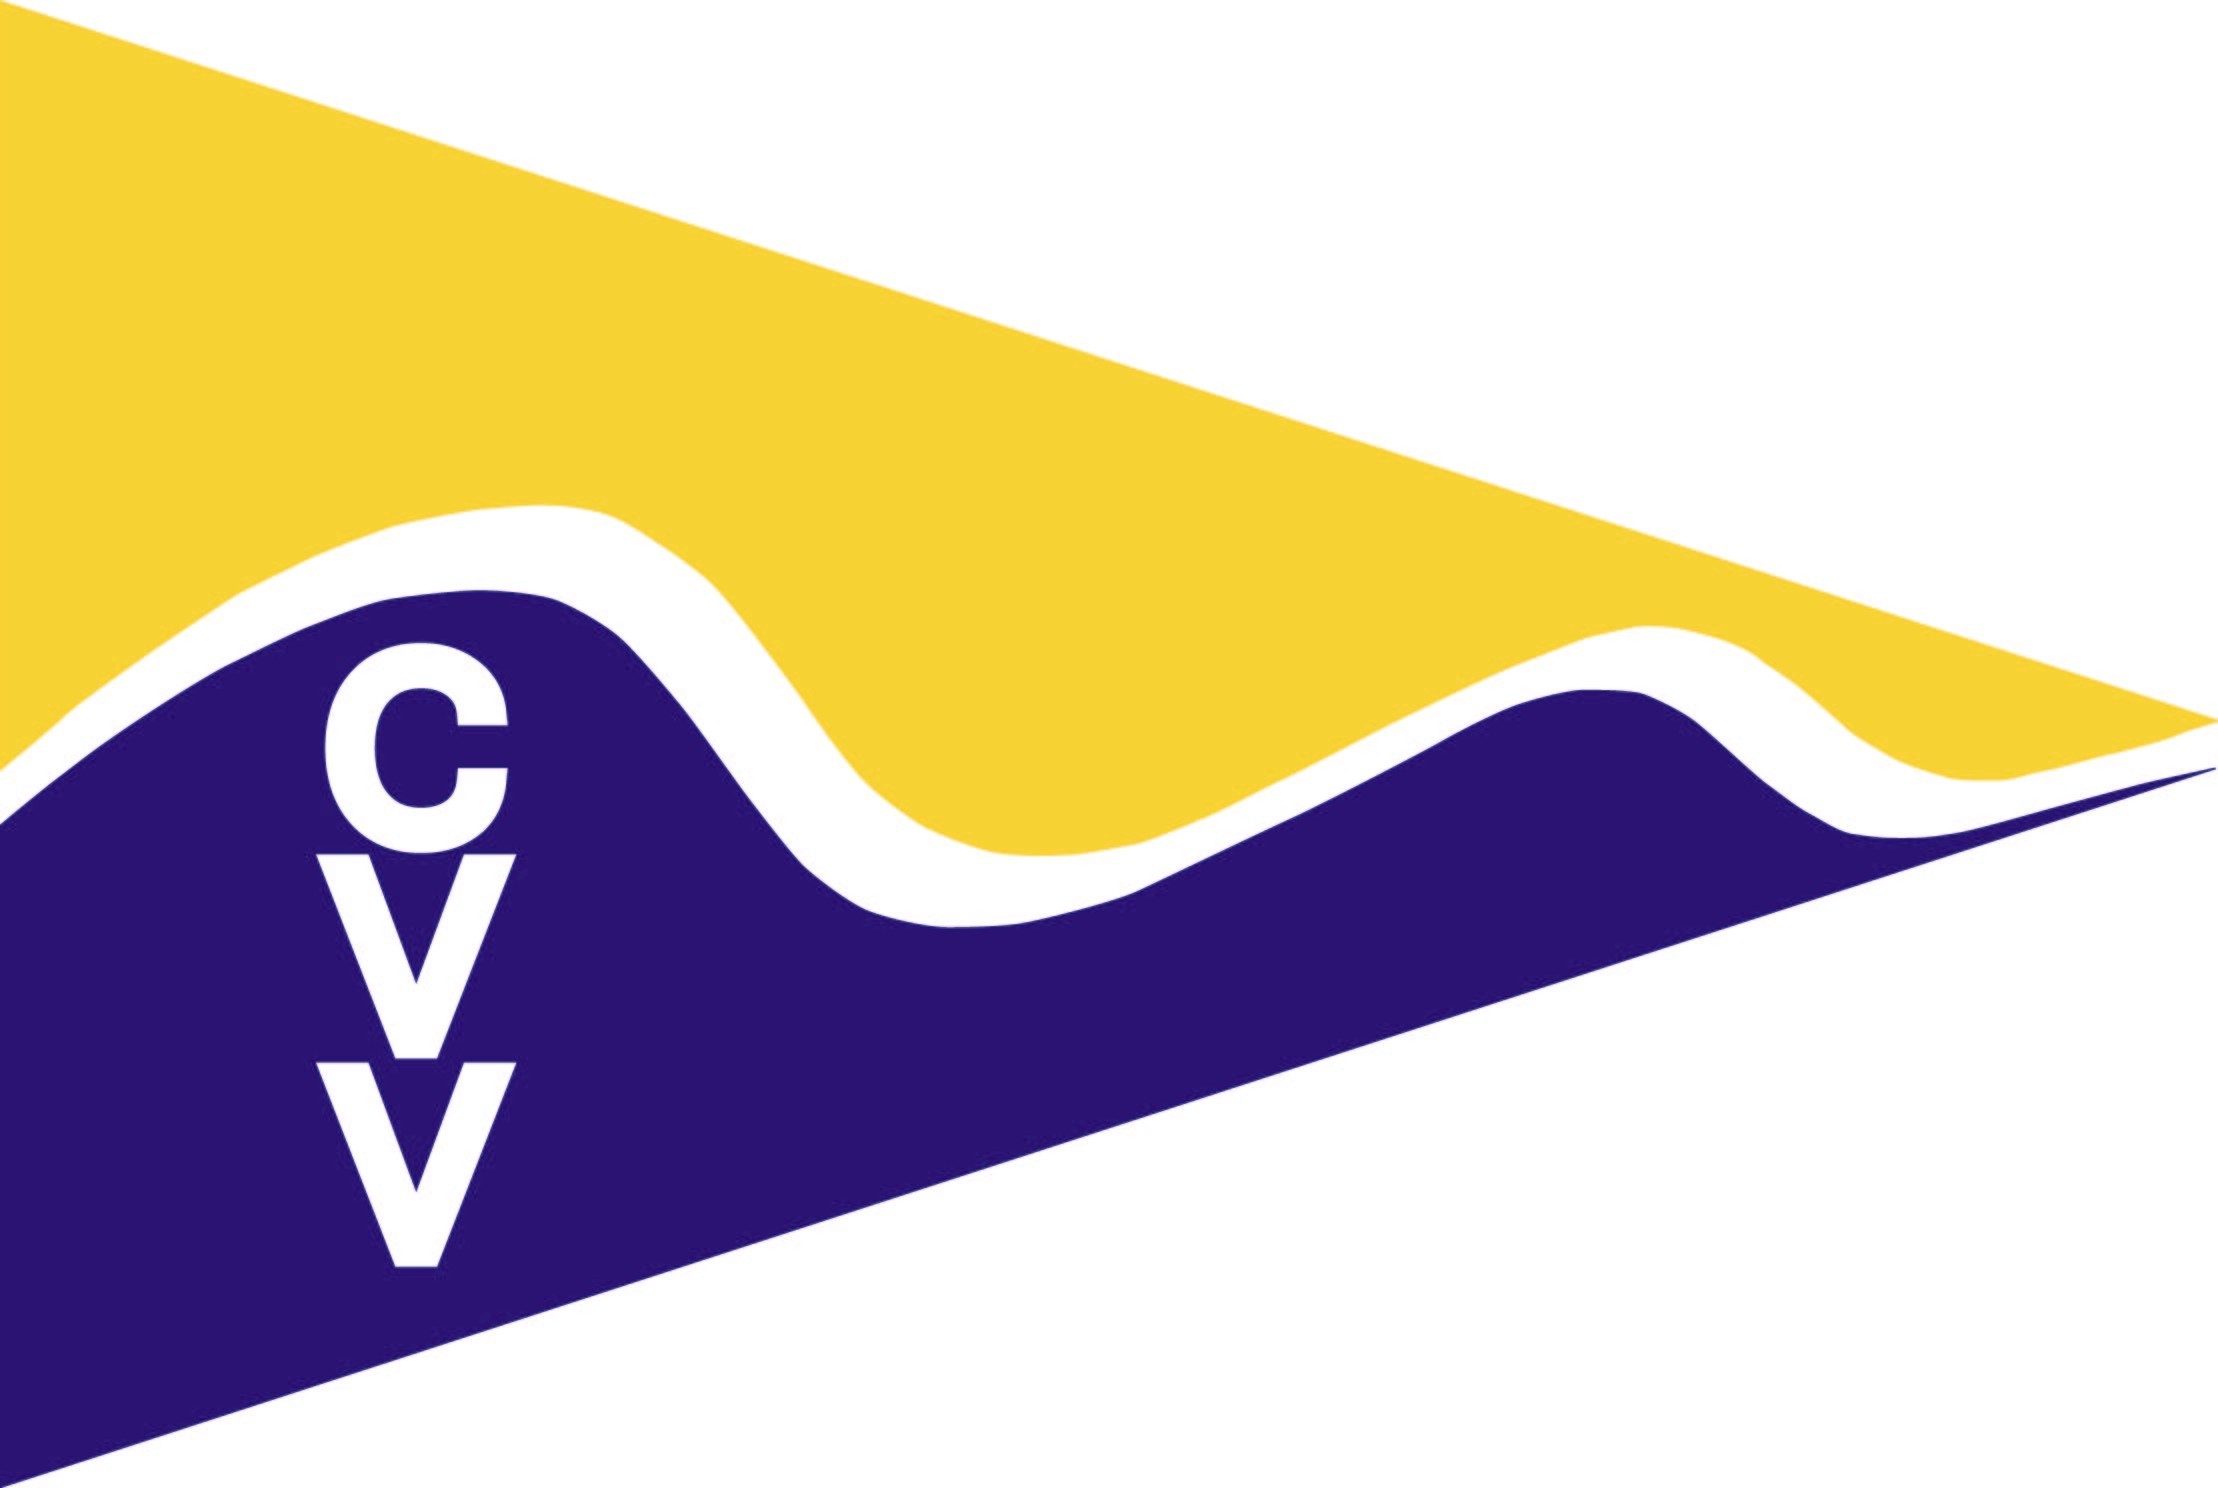  Classes ACVL  Challenge d'Hiver  CV Vidy  Acte 4 resultats finaux